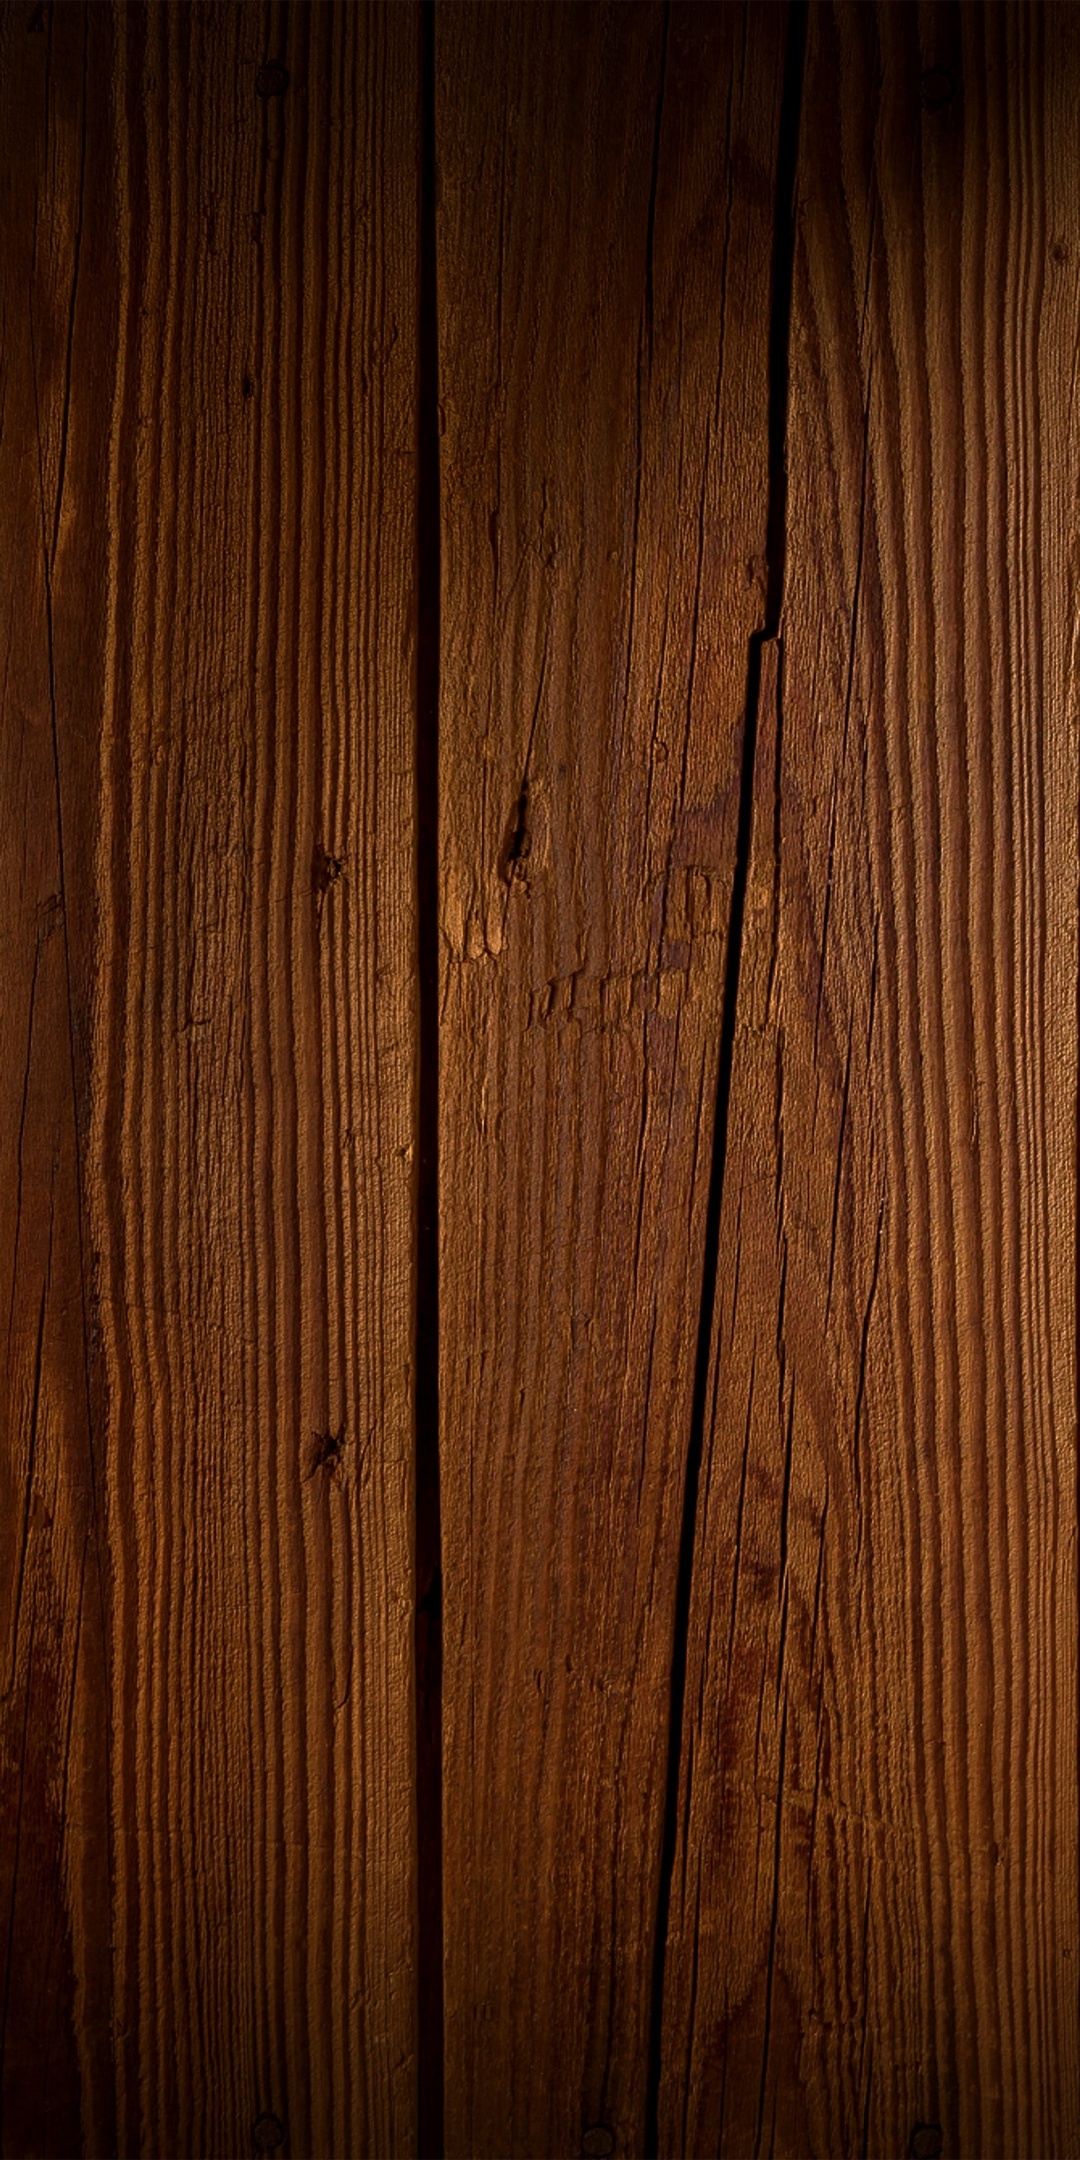 Wooden background 4K Wallpaper, Wooden Planks, 5K, Photography, #2304